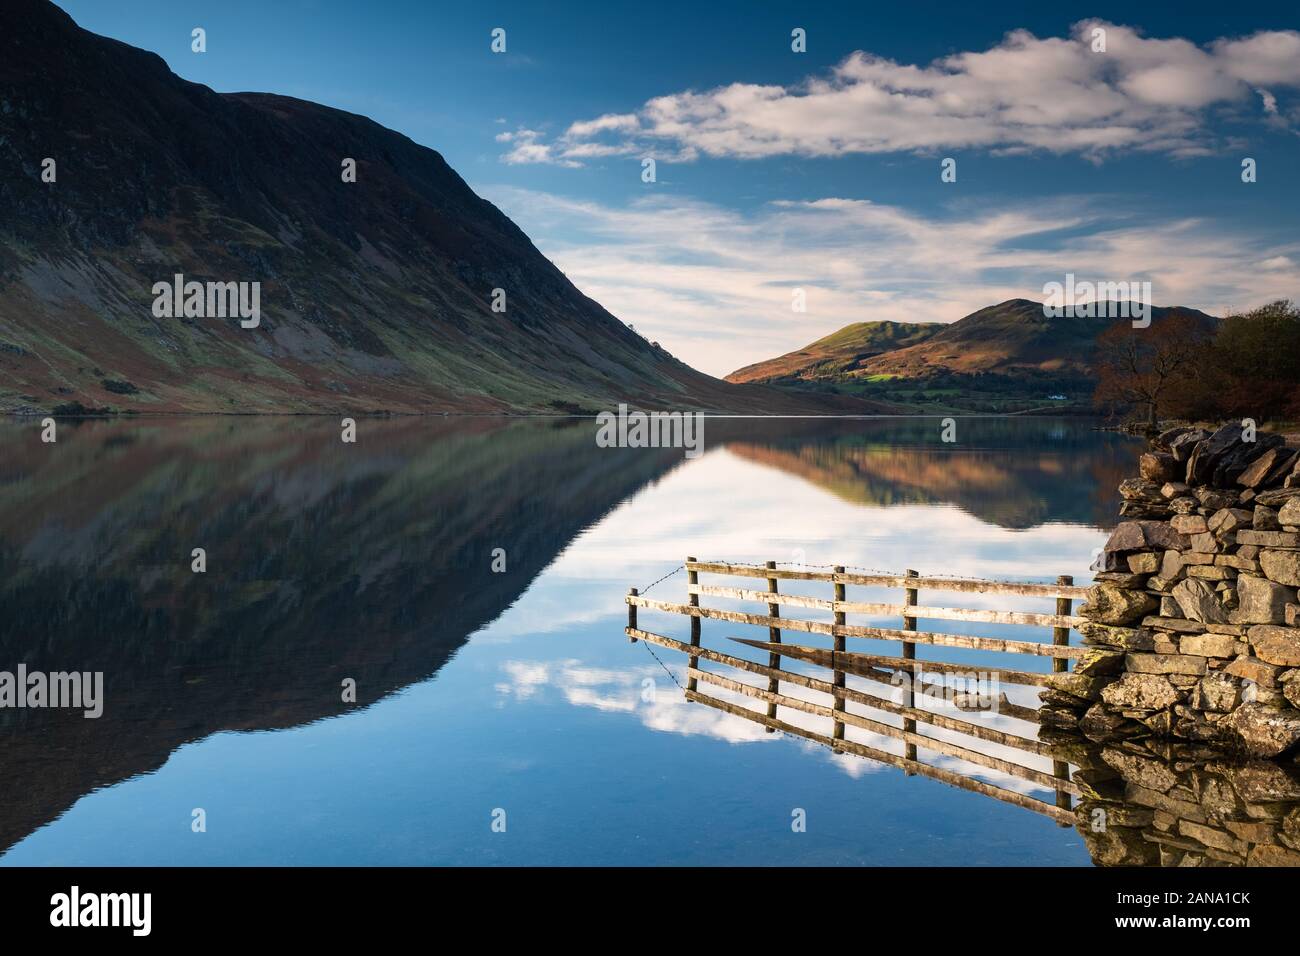 Lake District image Stock Photo